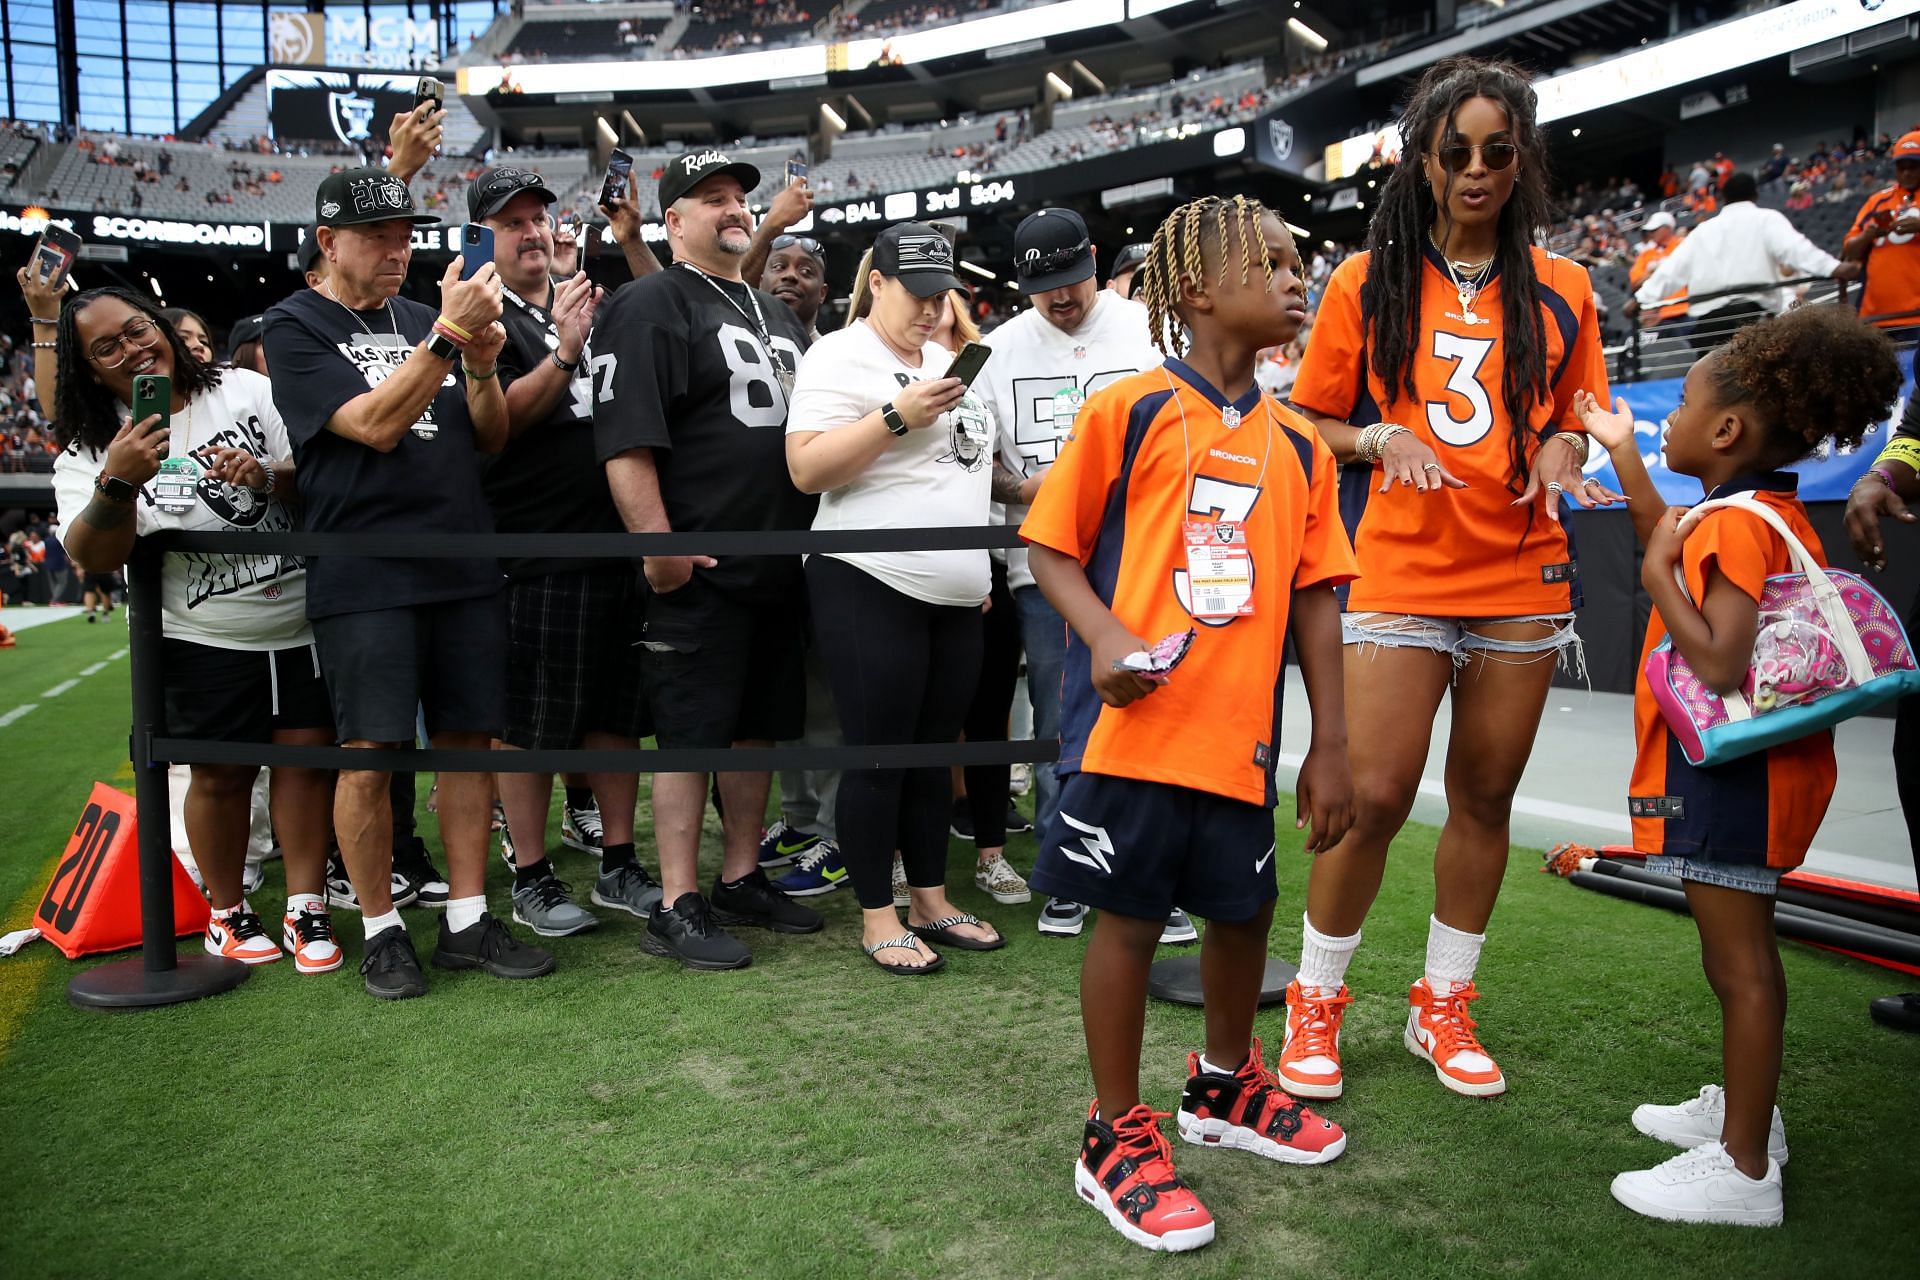 Ciara with the kids at a Denver Broncos game last season